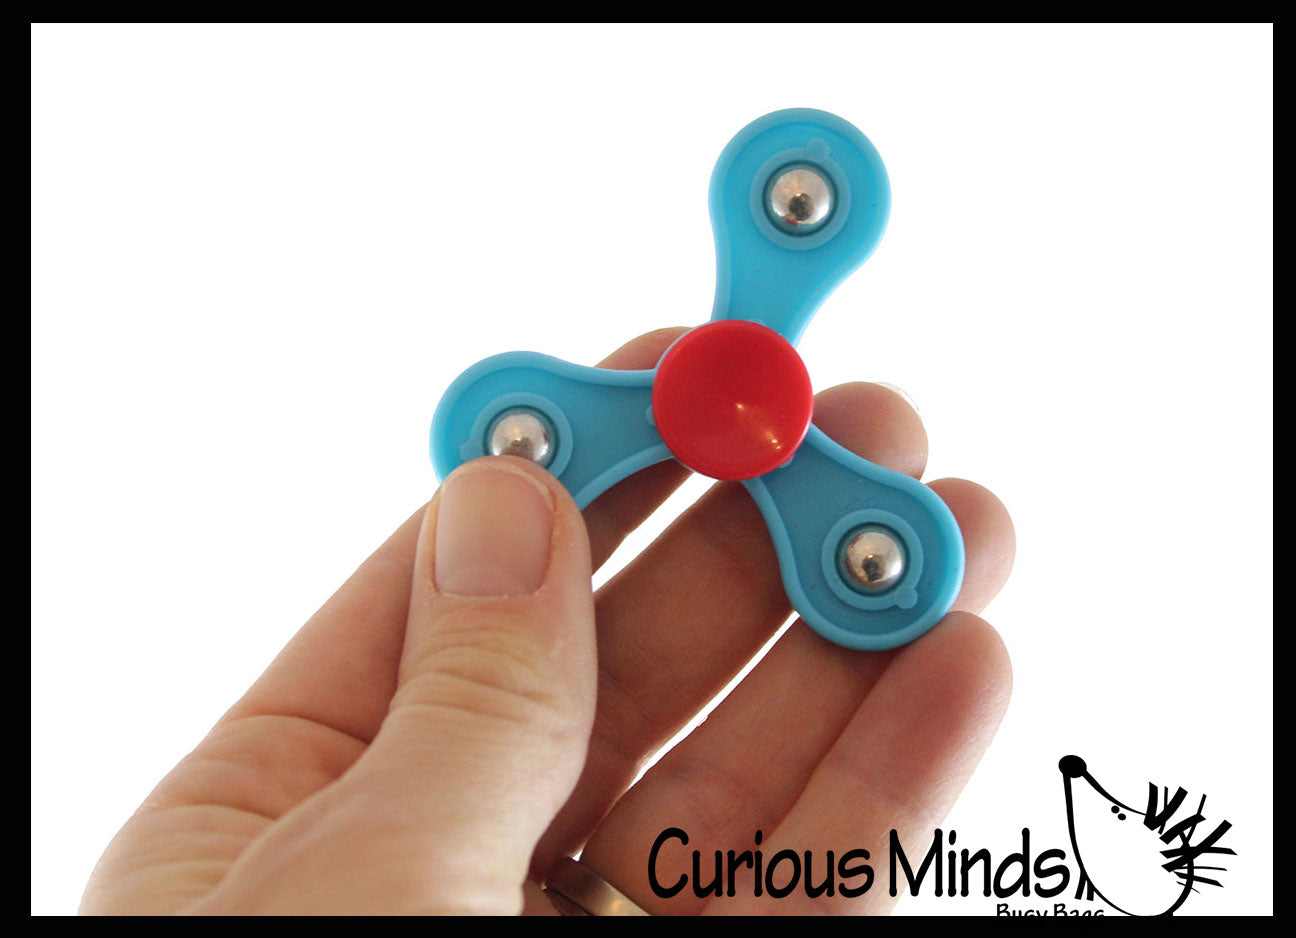 Small Fidget Spinners - Fidget Toy - Sensory Stress Toy - Tiny